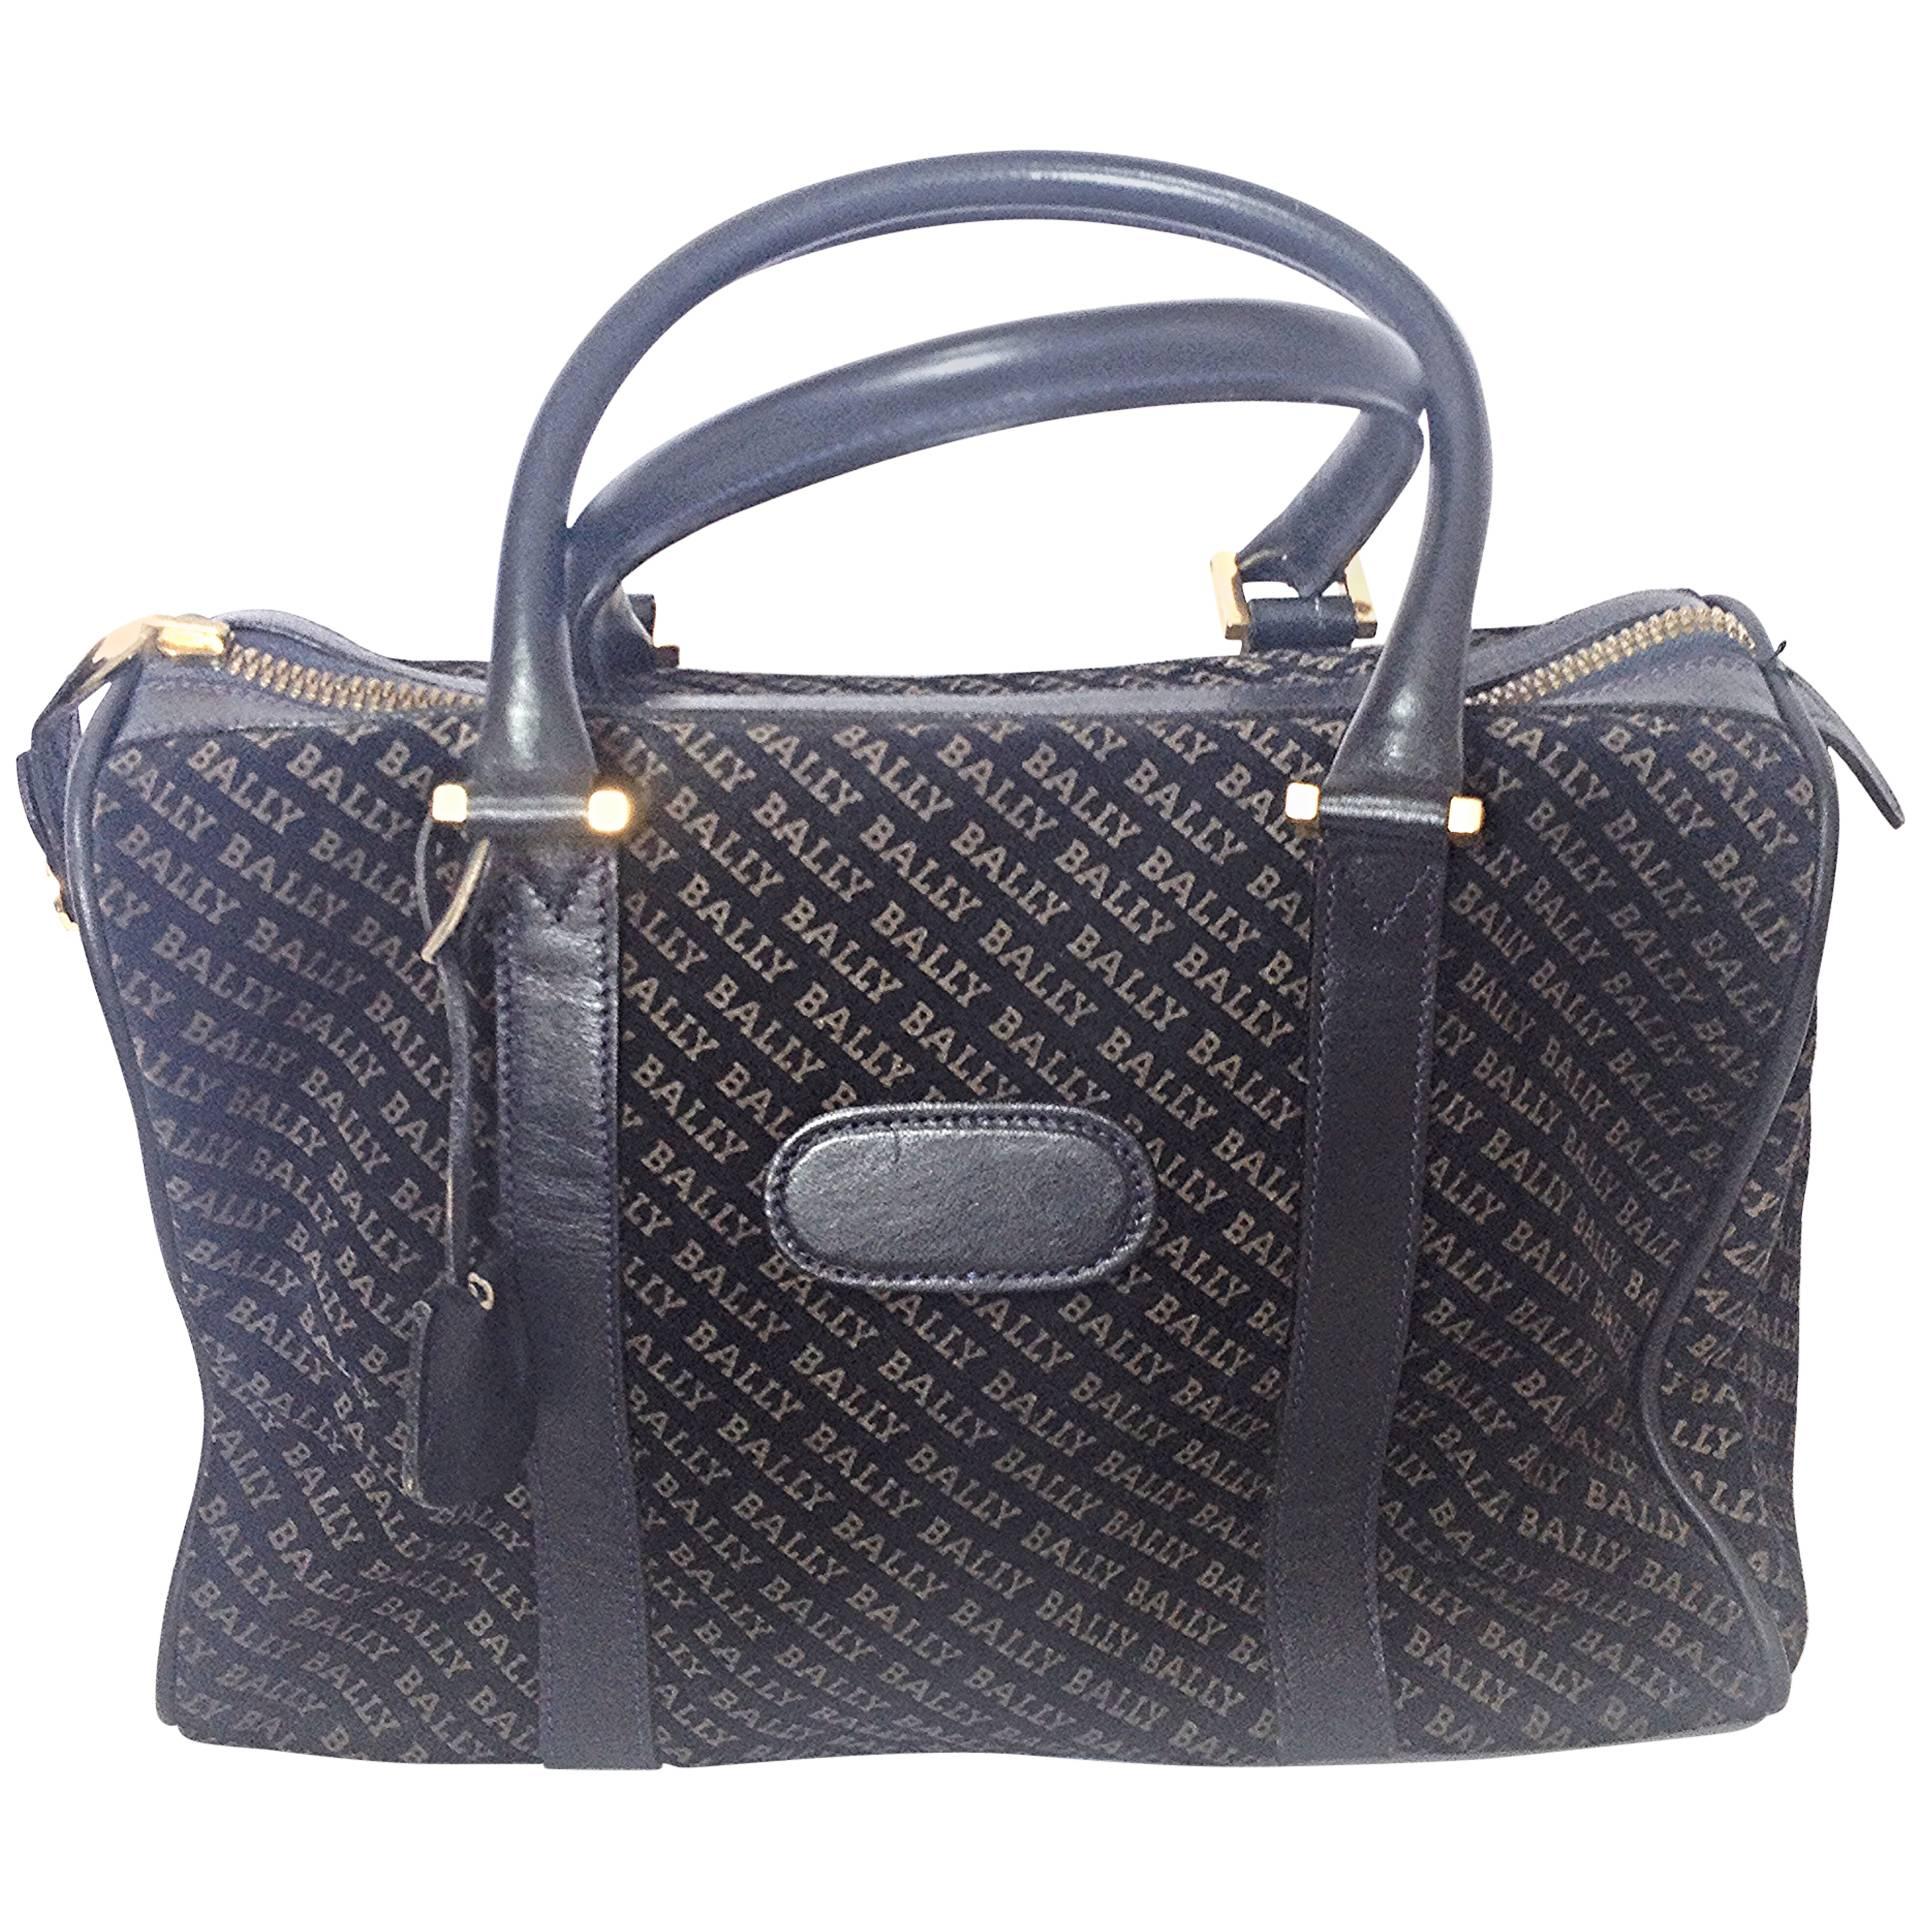 Vintage Bally dark navy genuine suede leather mini duffle, speedy type handbag